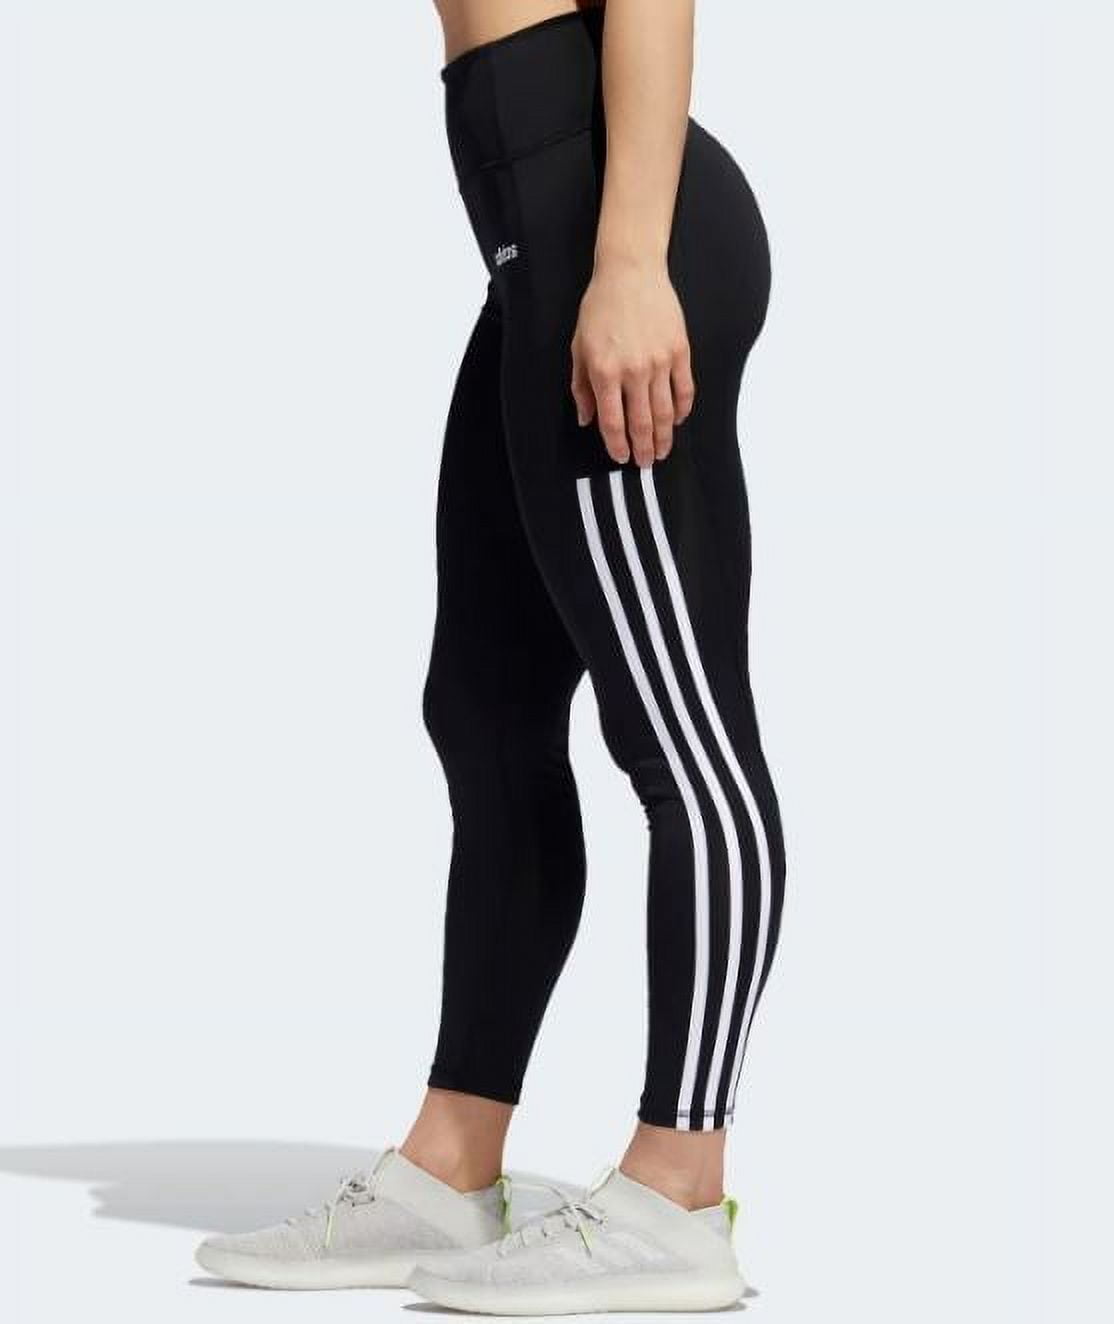 Adidas Women's 7/8 3 Stripe High Waist Active Tight Leggings, Black/White,  Large